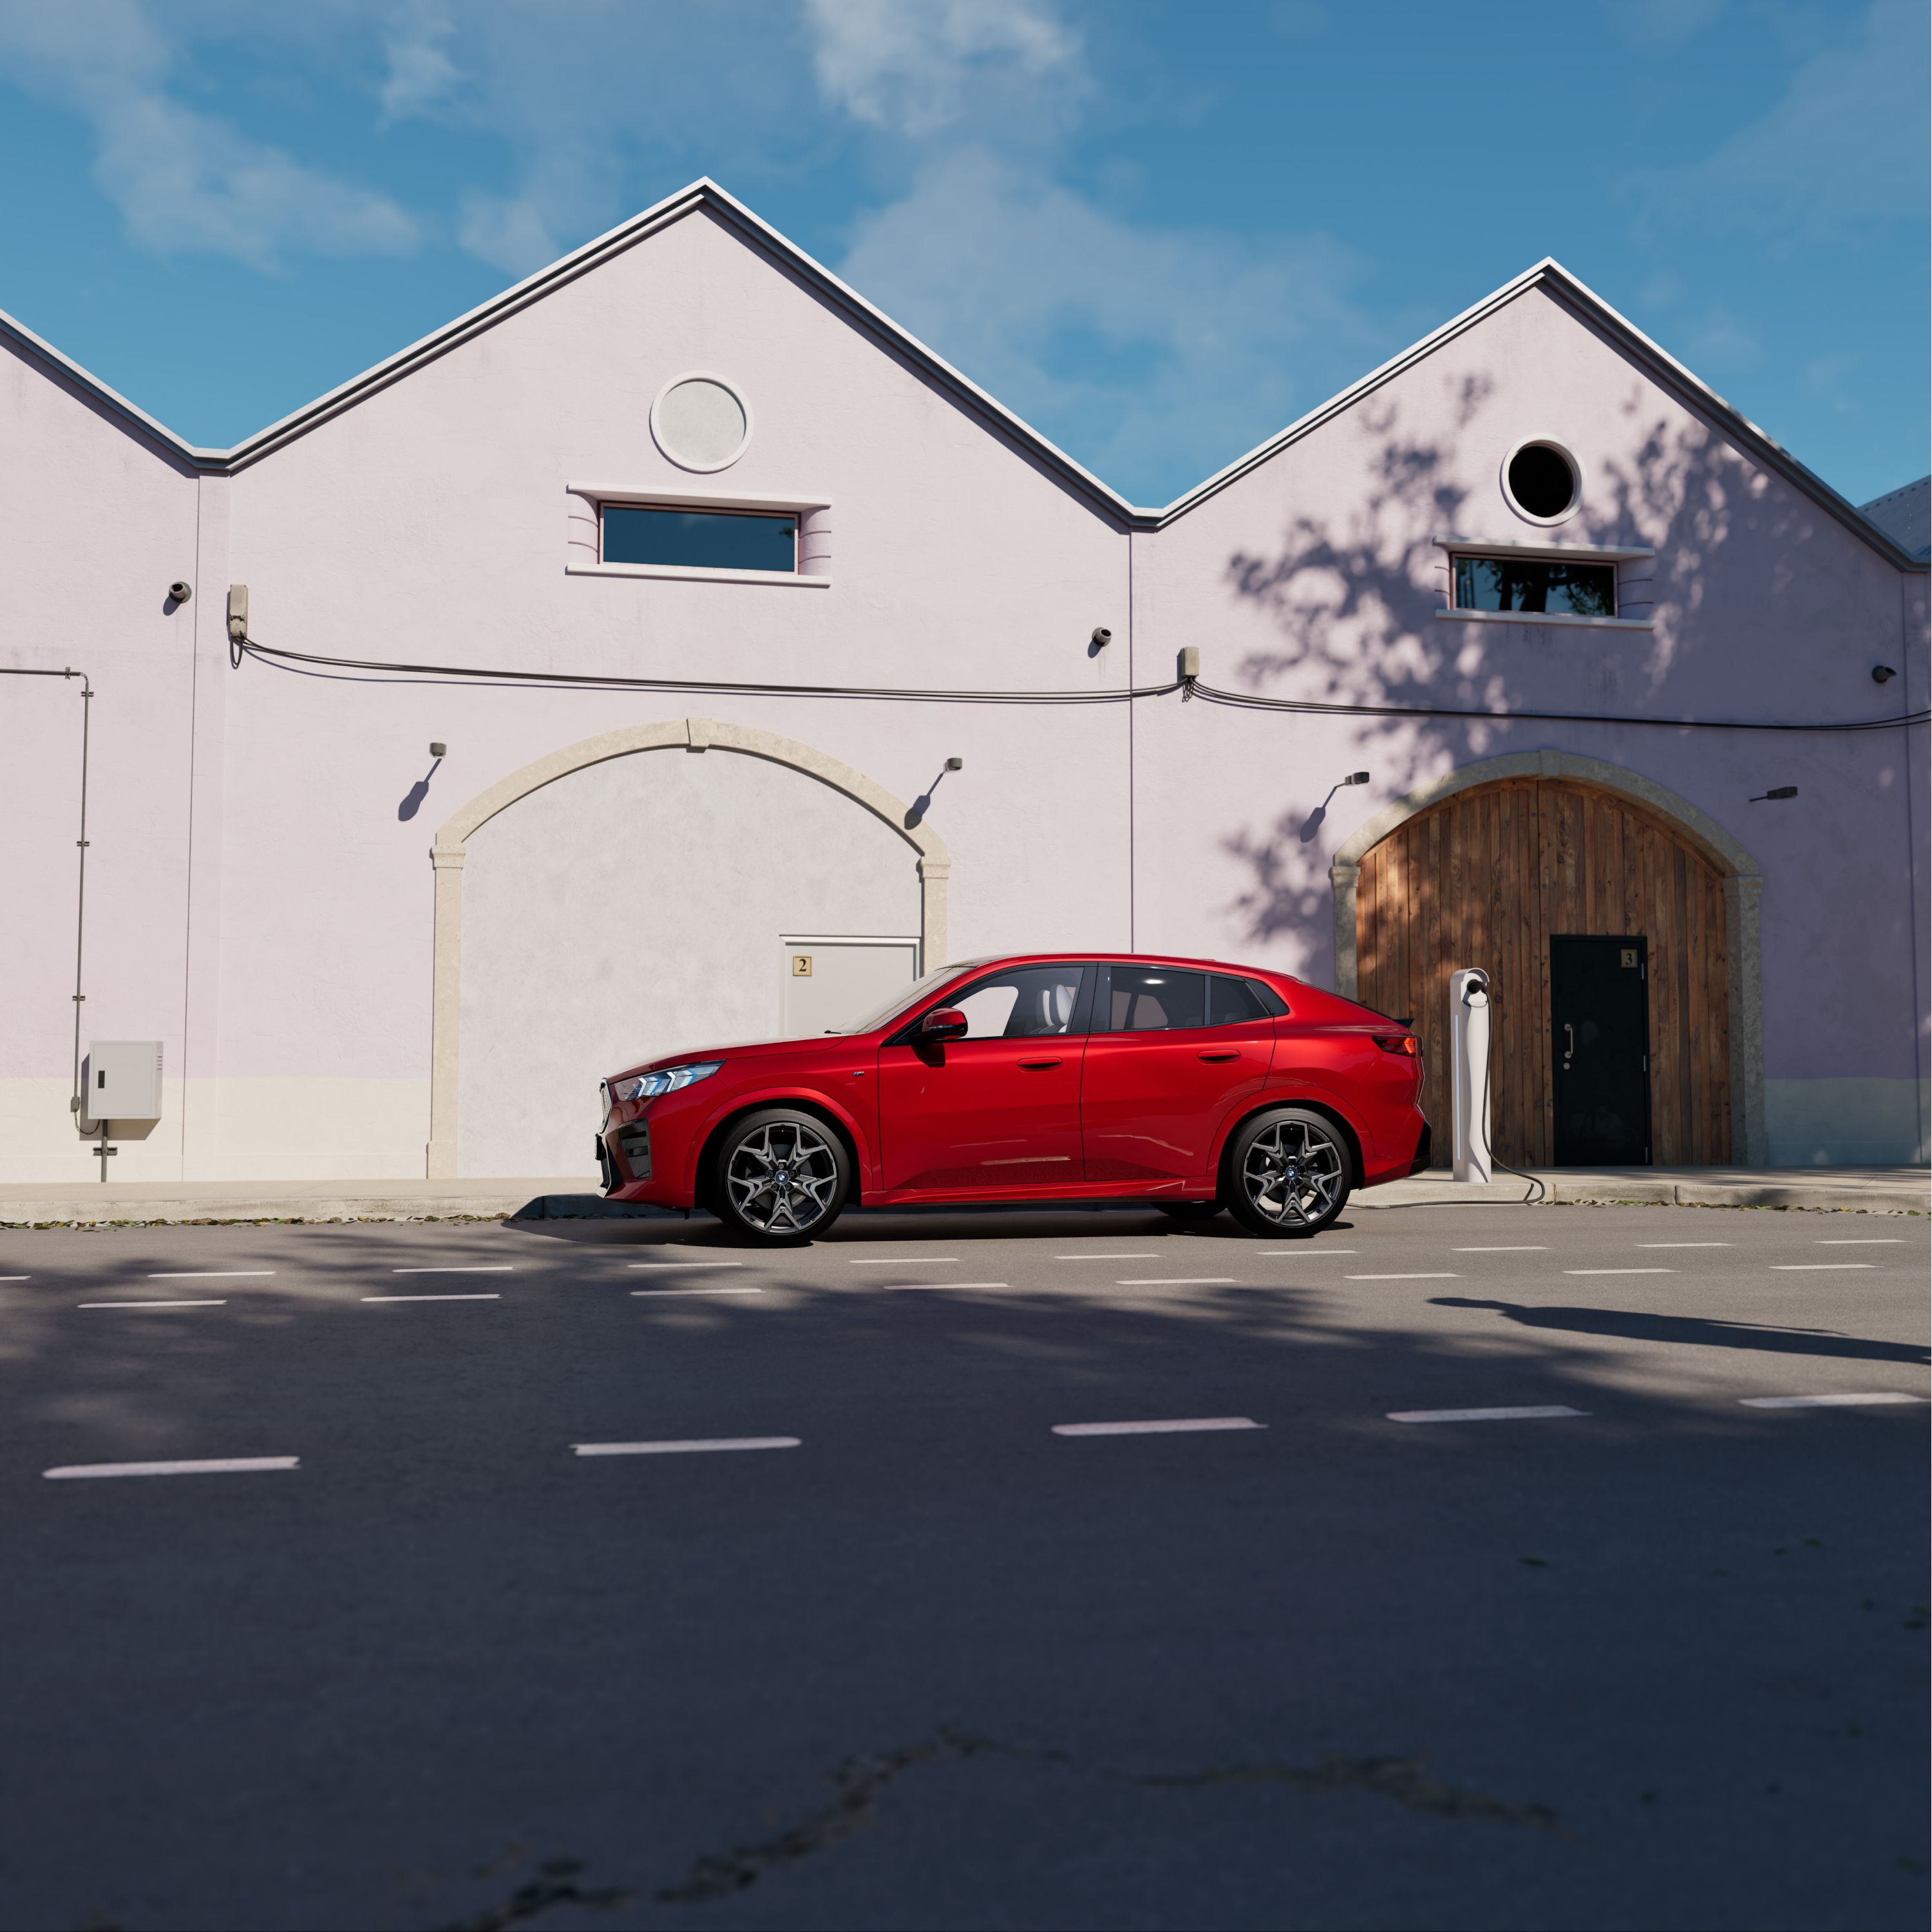 BMW iX2 σε κόκκινο Dragonfire Red, σταθμευμένη μπροστά από εξοχική κατοικία σε ηλιόλουστο καιρό